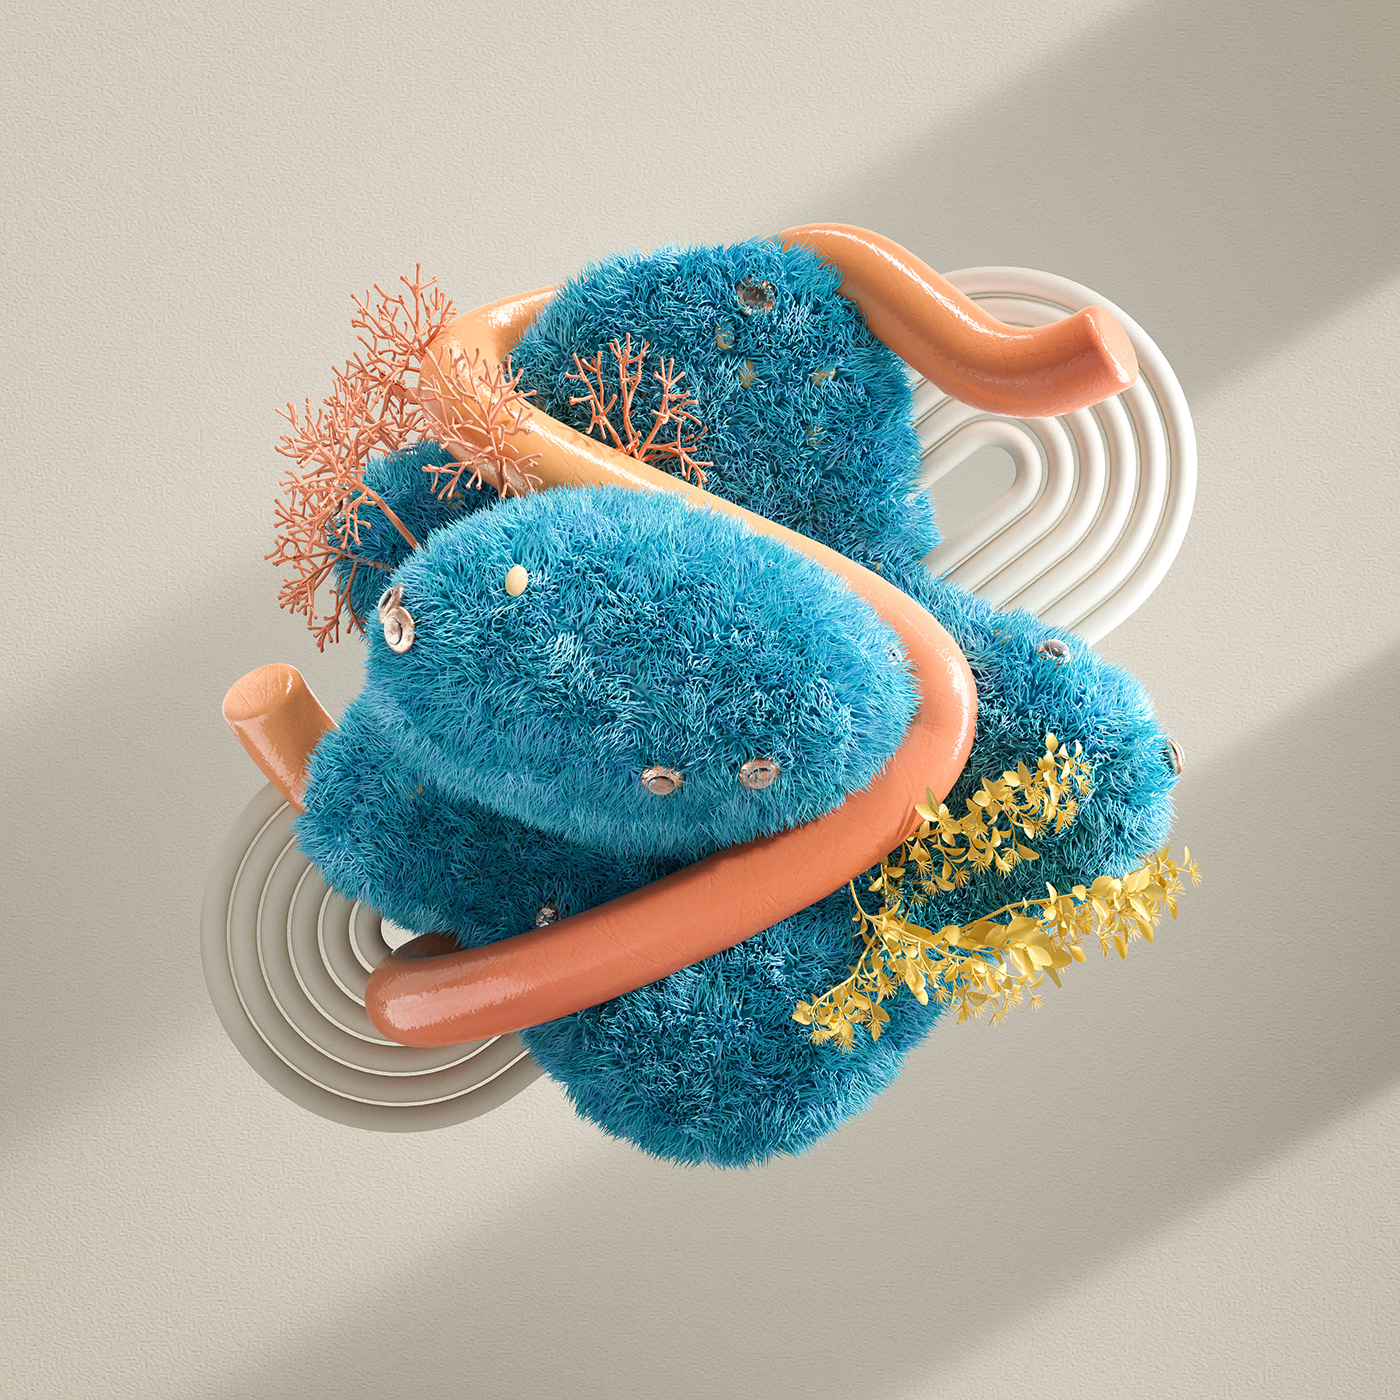 3D 4d abstract colorful Digital Art  ILLUSTRATION  octane Render shapes texture